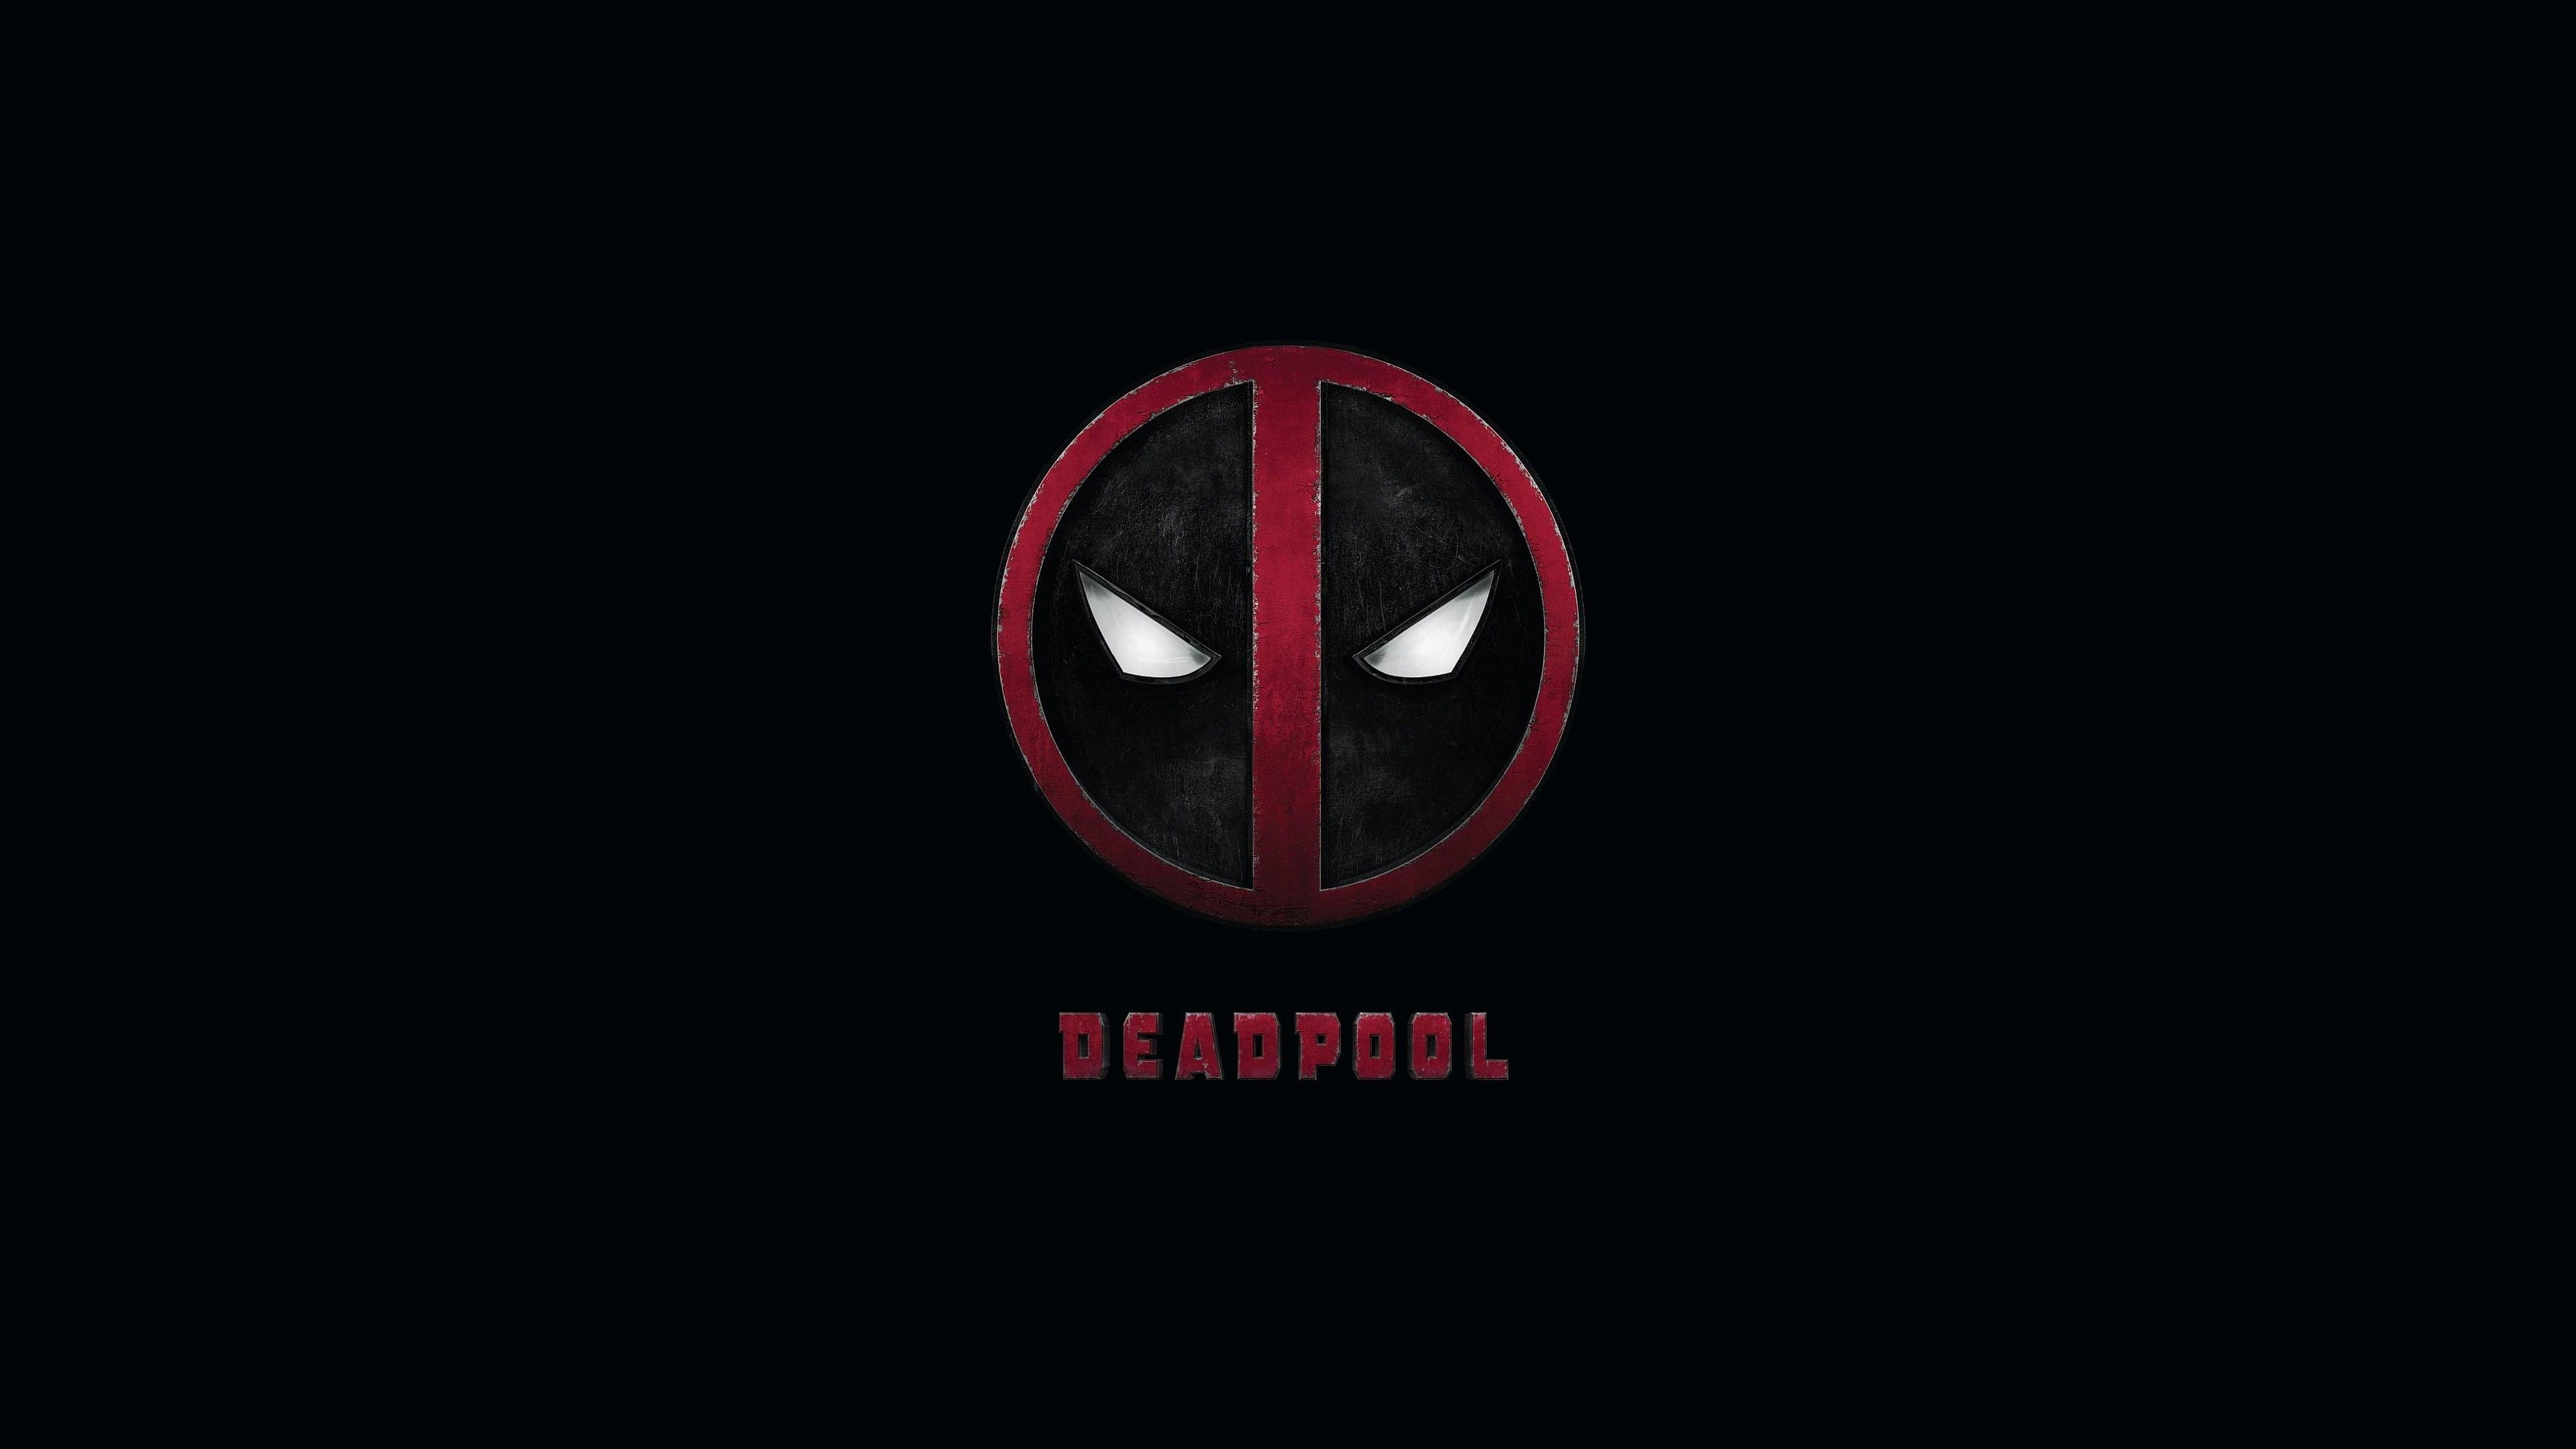 Deadpool Logo 4k Movie Wallpaper 2016 3840x2160. Deadpool wallpaper, Deadpool logo wallpaper, Deadpool logo